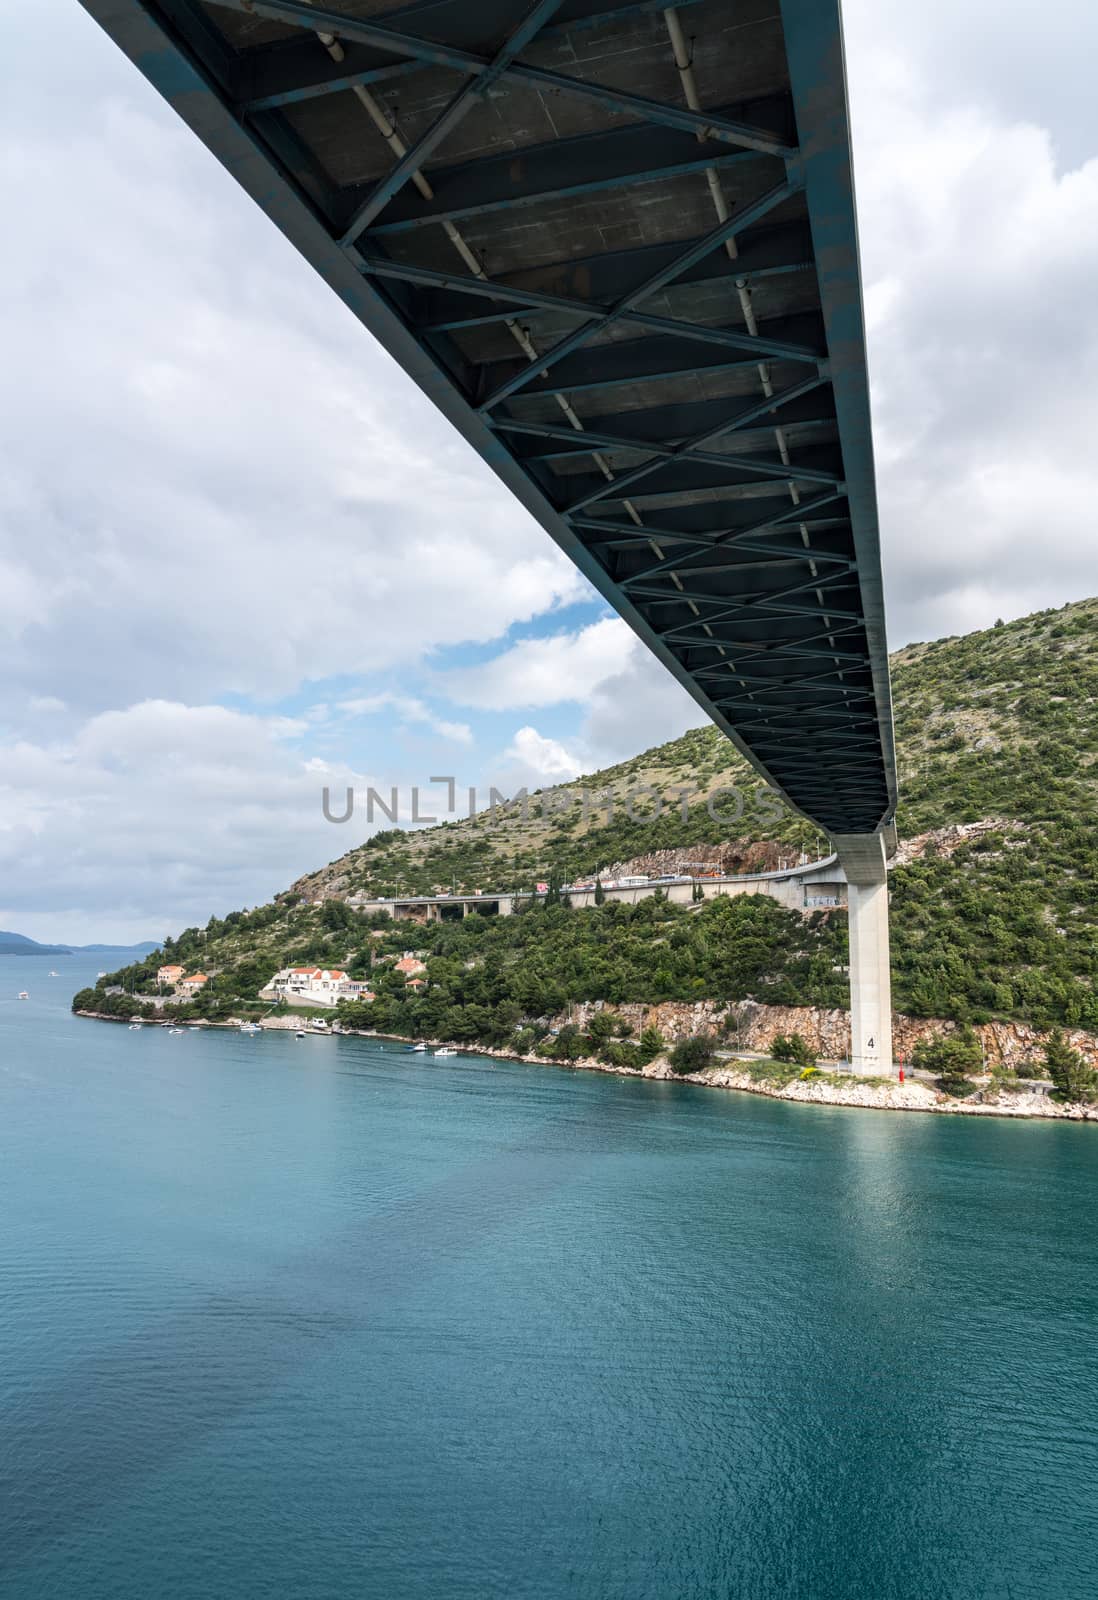 Underside of new bridge in the port of Dubrovnik in Croatia by steheap